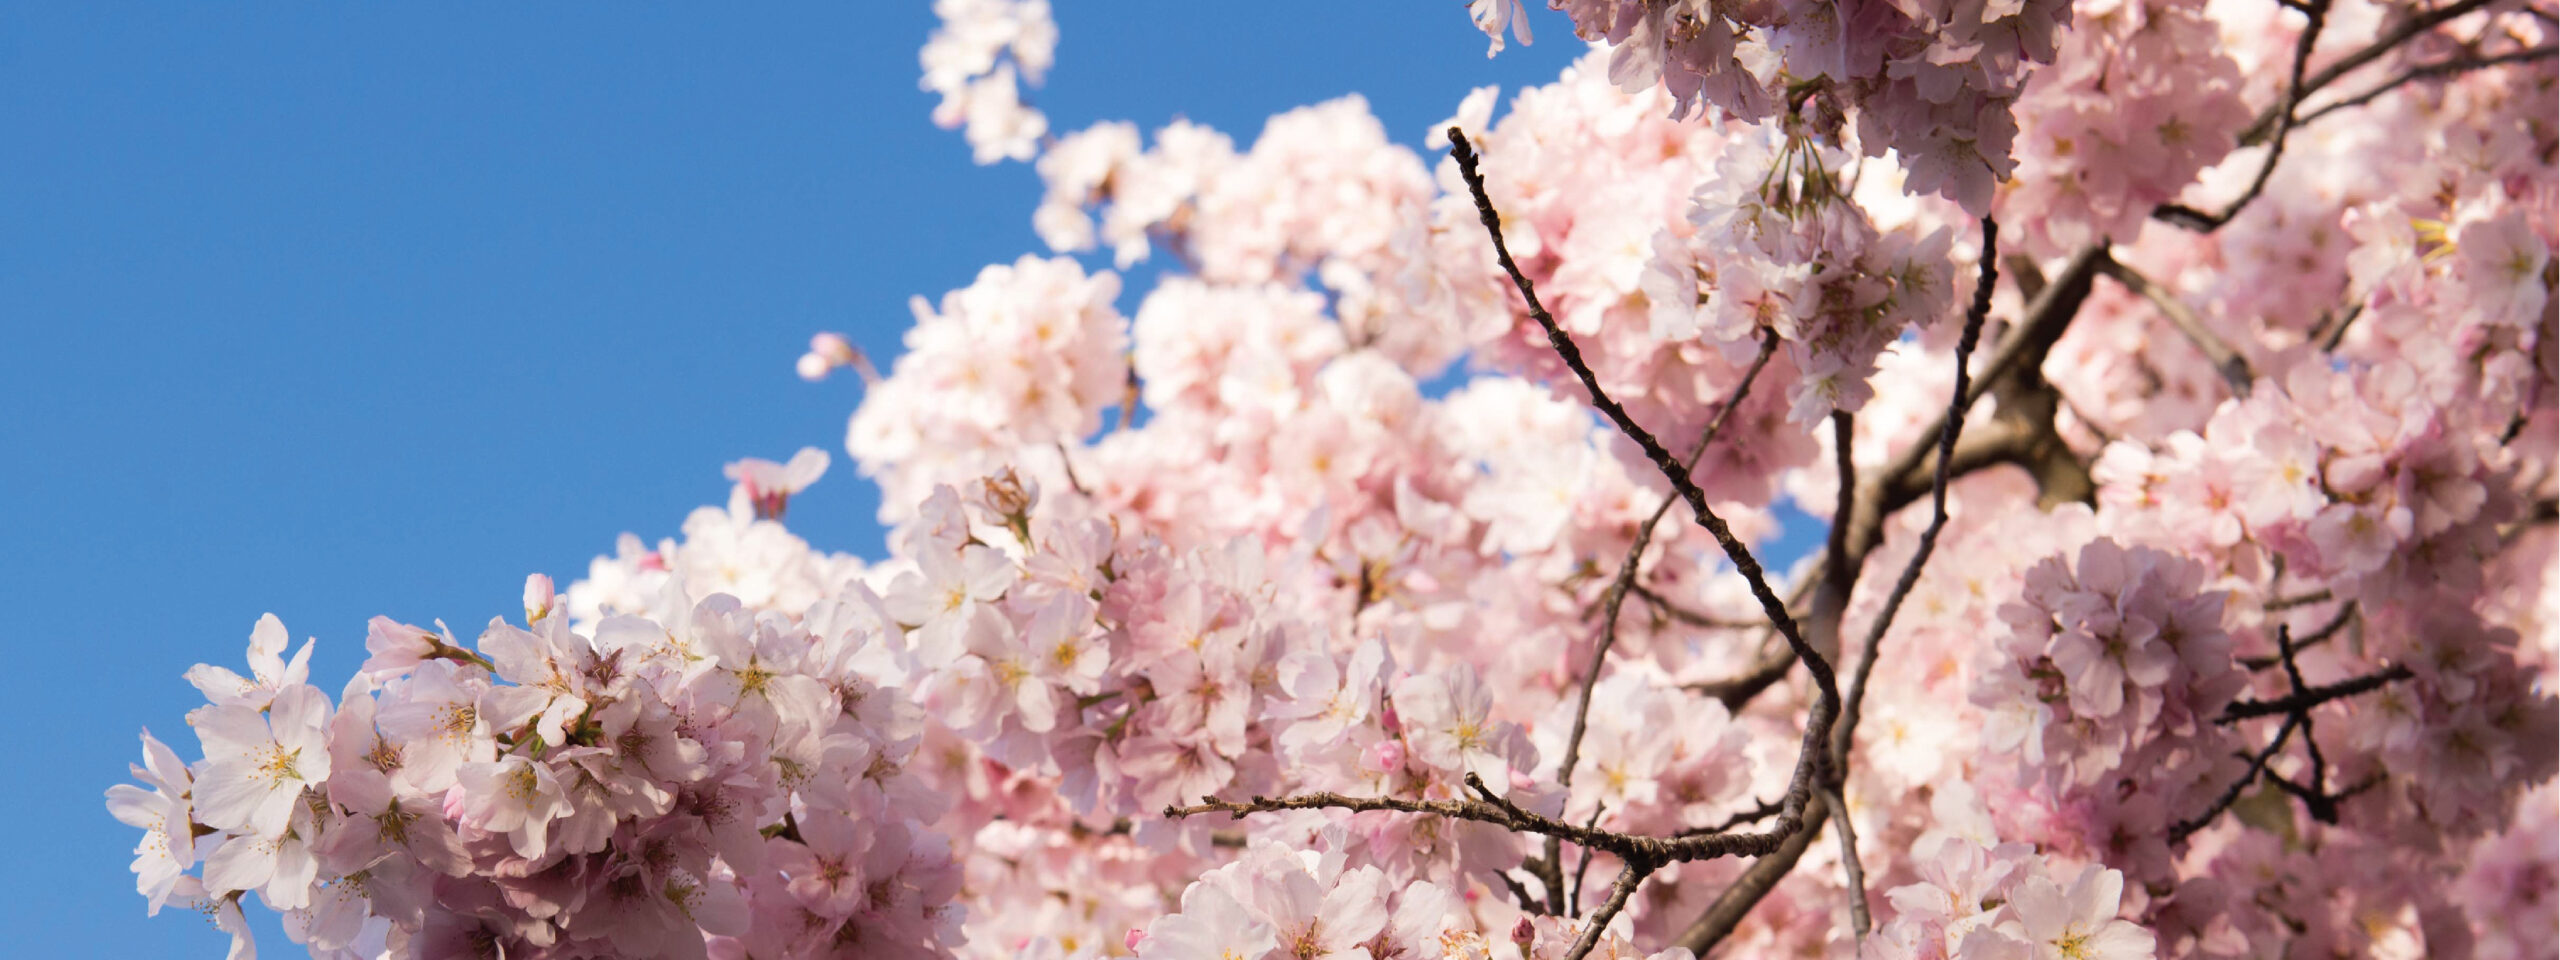 Cherry Blossoms in Washington, DC!